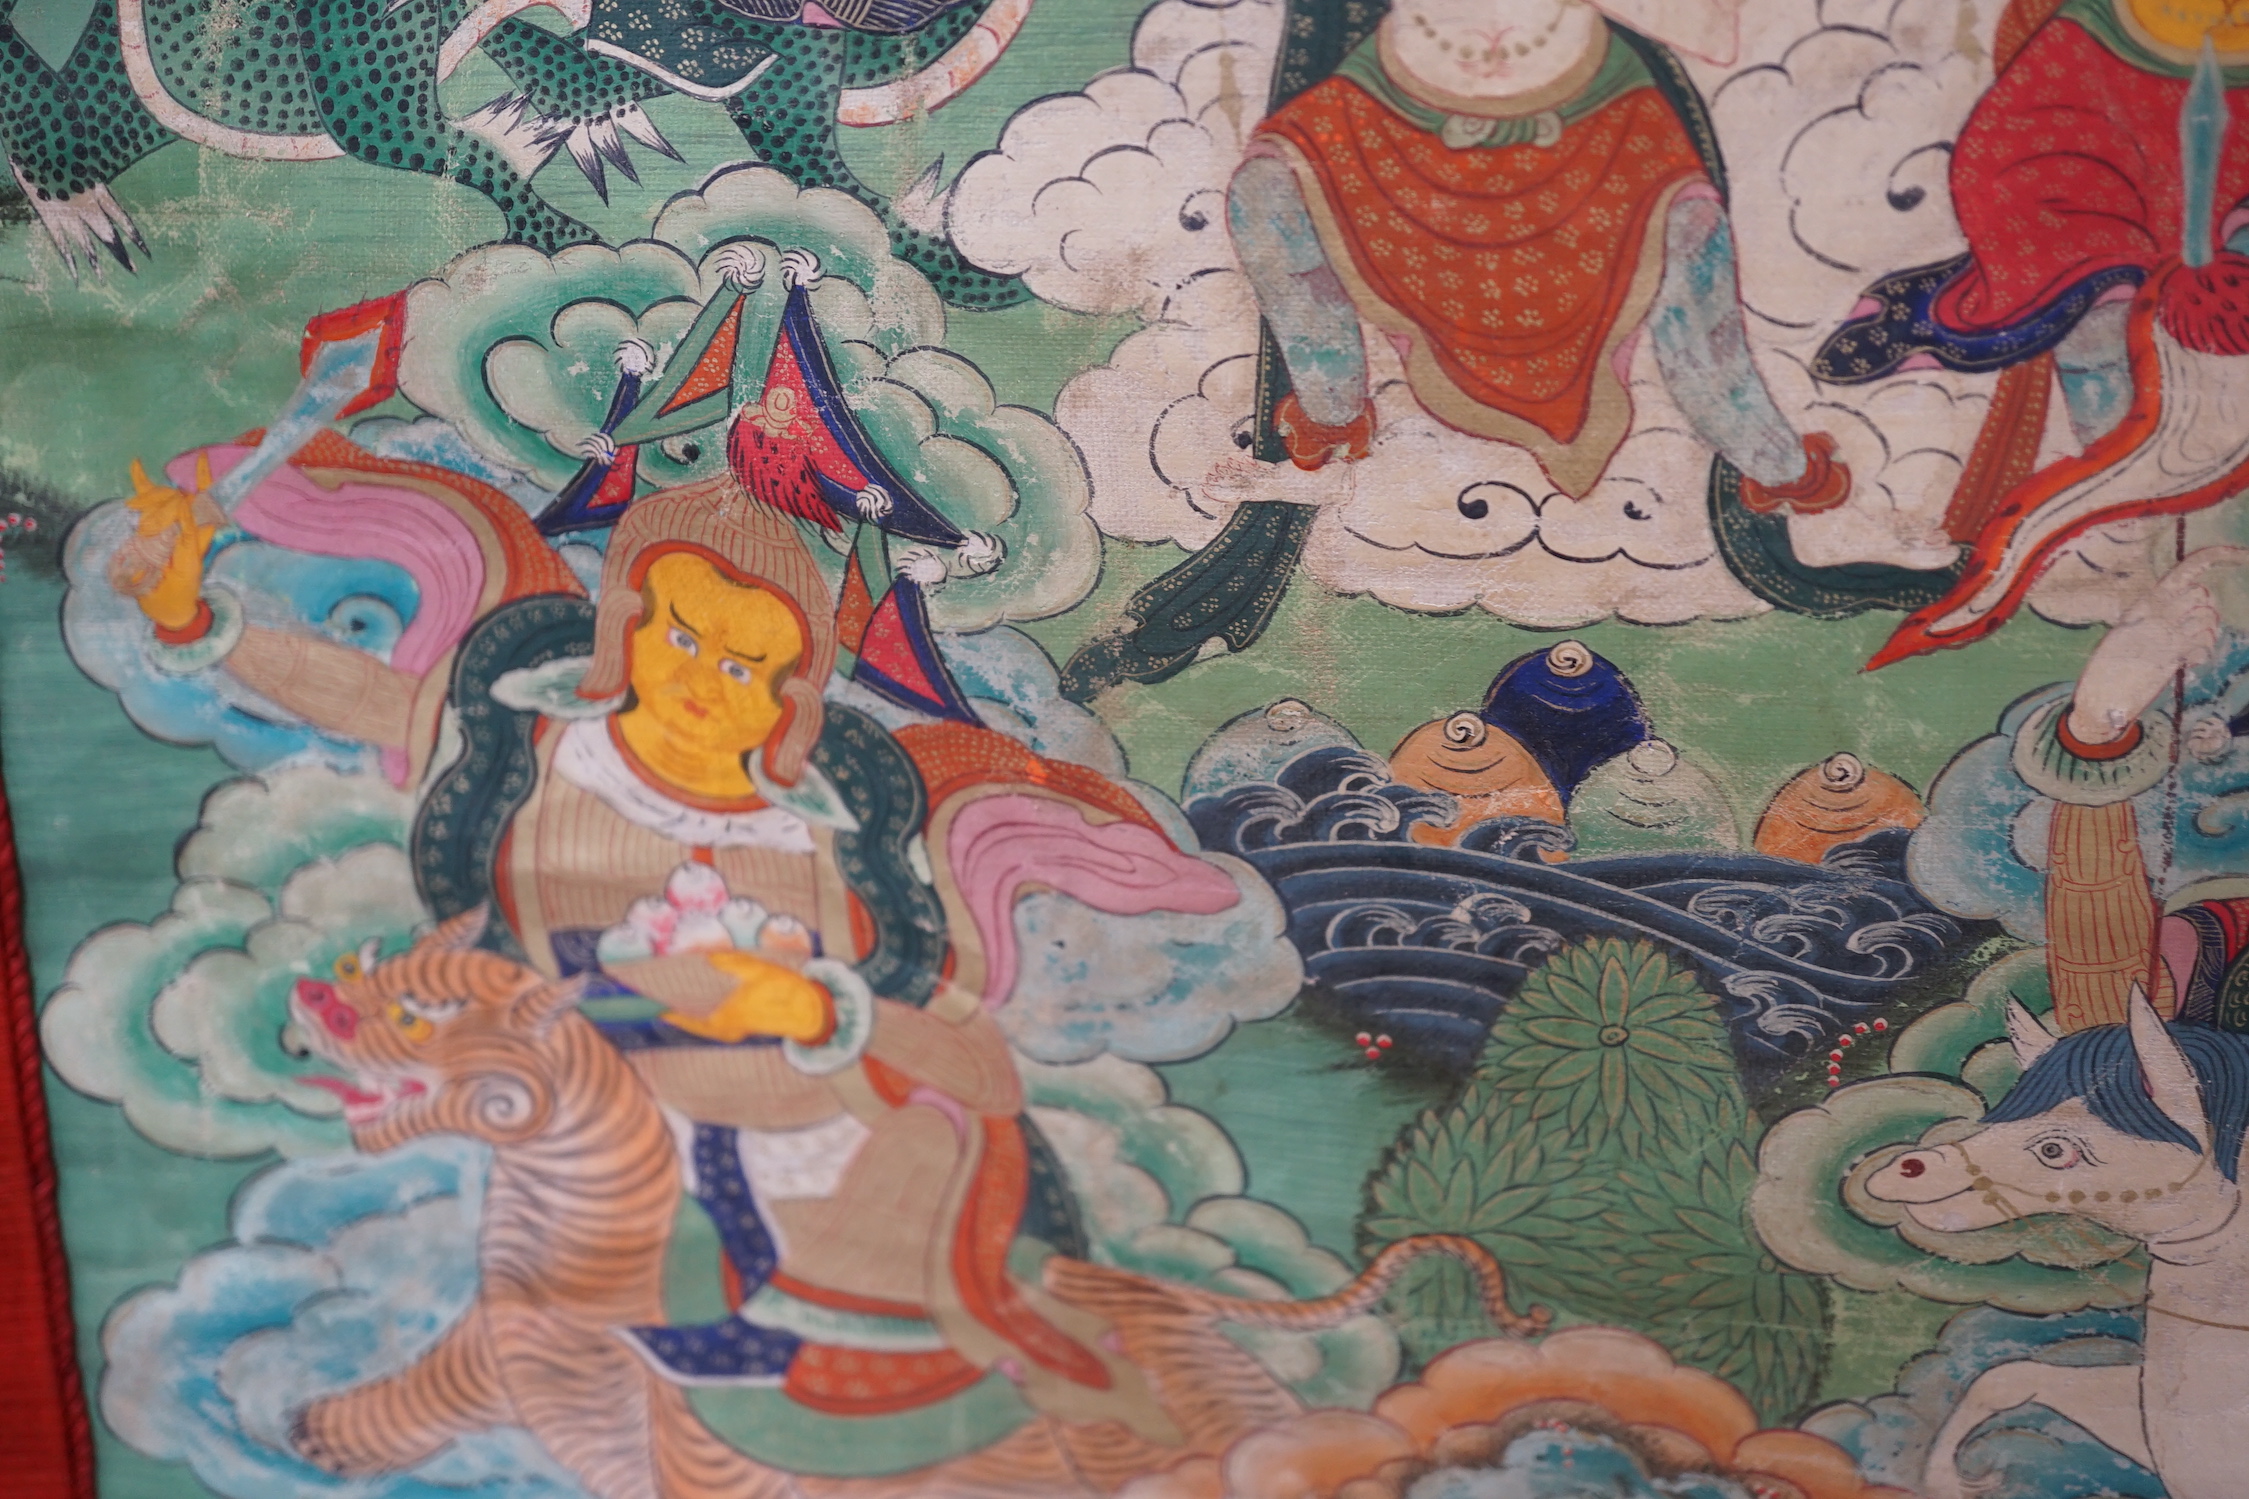 A Tibetan or Nepalese painted Thangka